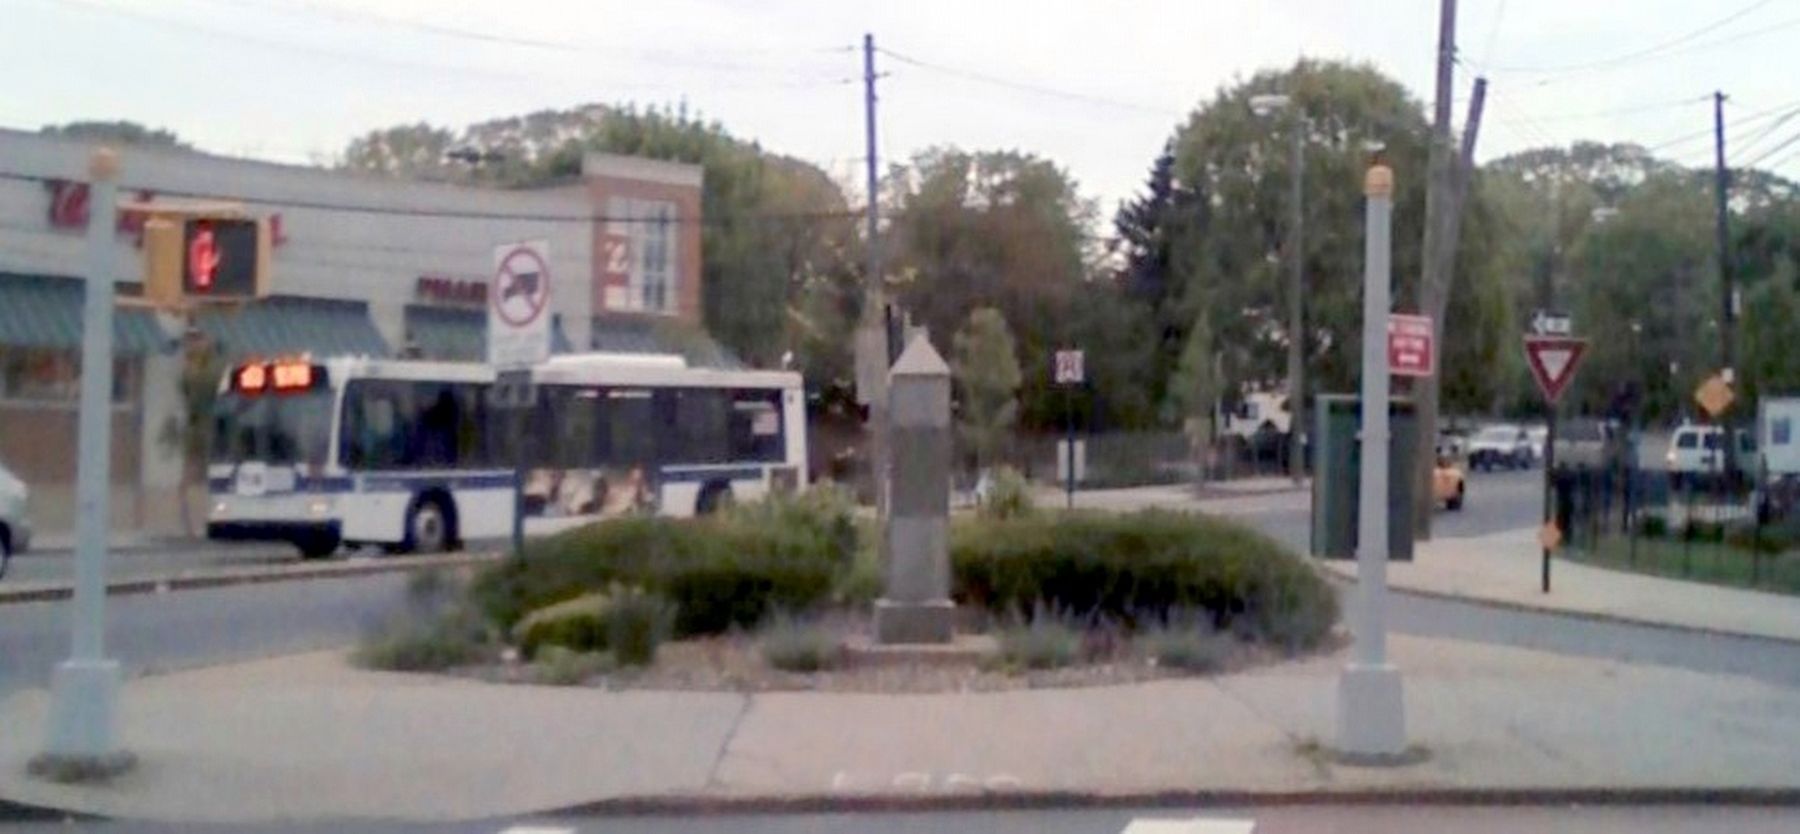 Michael J. Leonard Memorial Plaza location image. Click for full size.